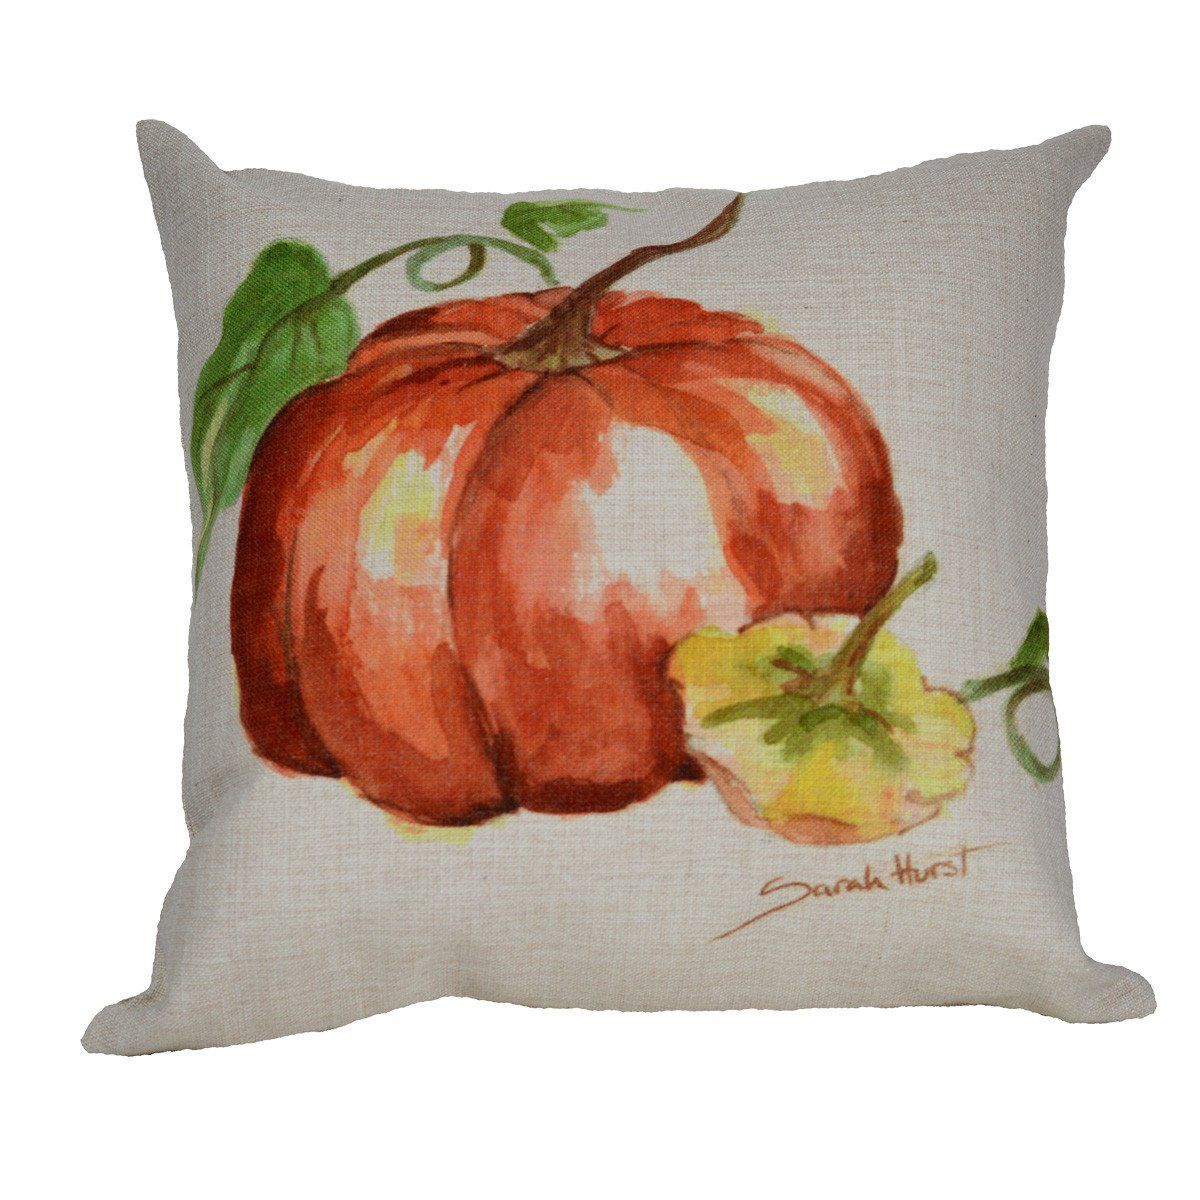 G128 18 x 18 in Fall Pumpkin Thankful Waterproof Pillow, Set of 4